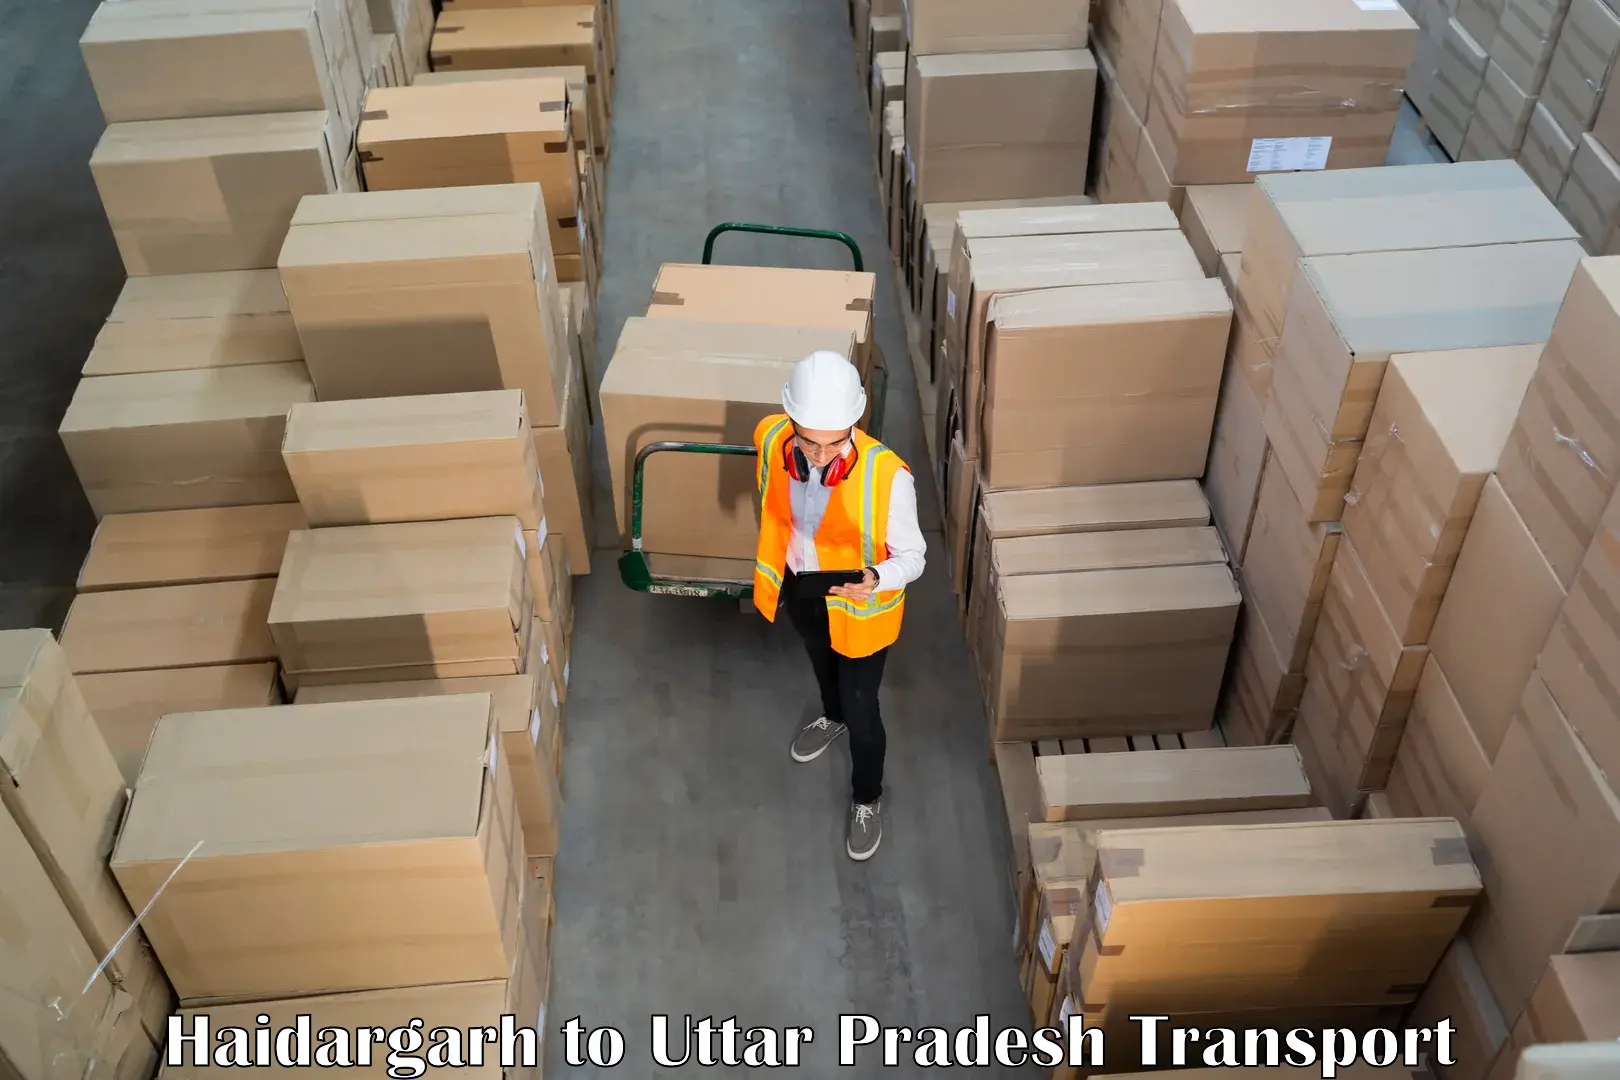 Delivery service Haidargarh to Bansdih